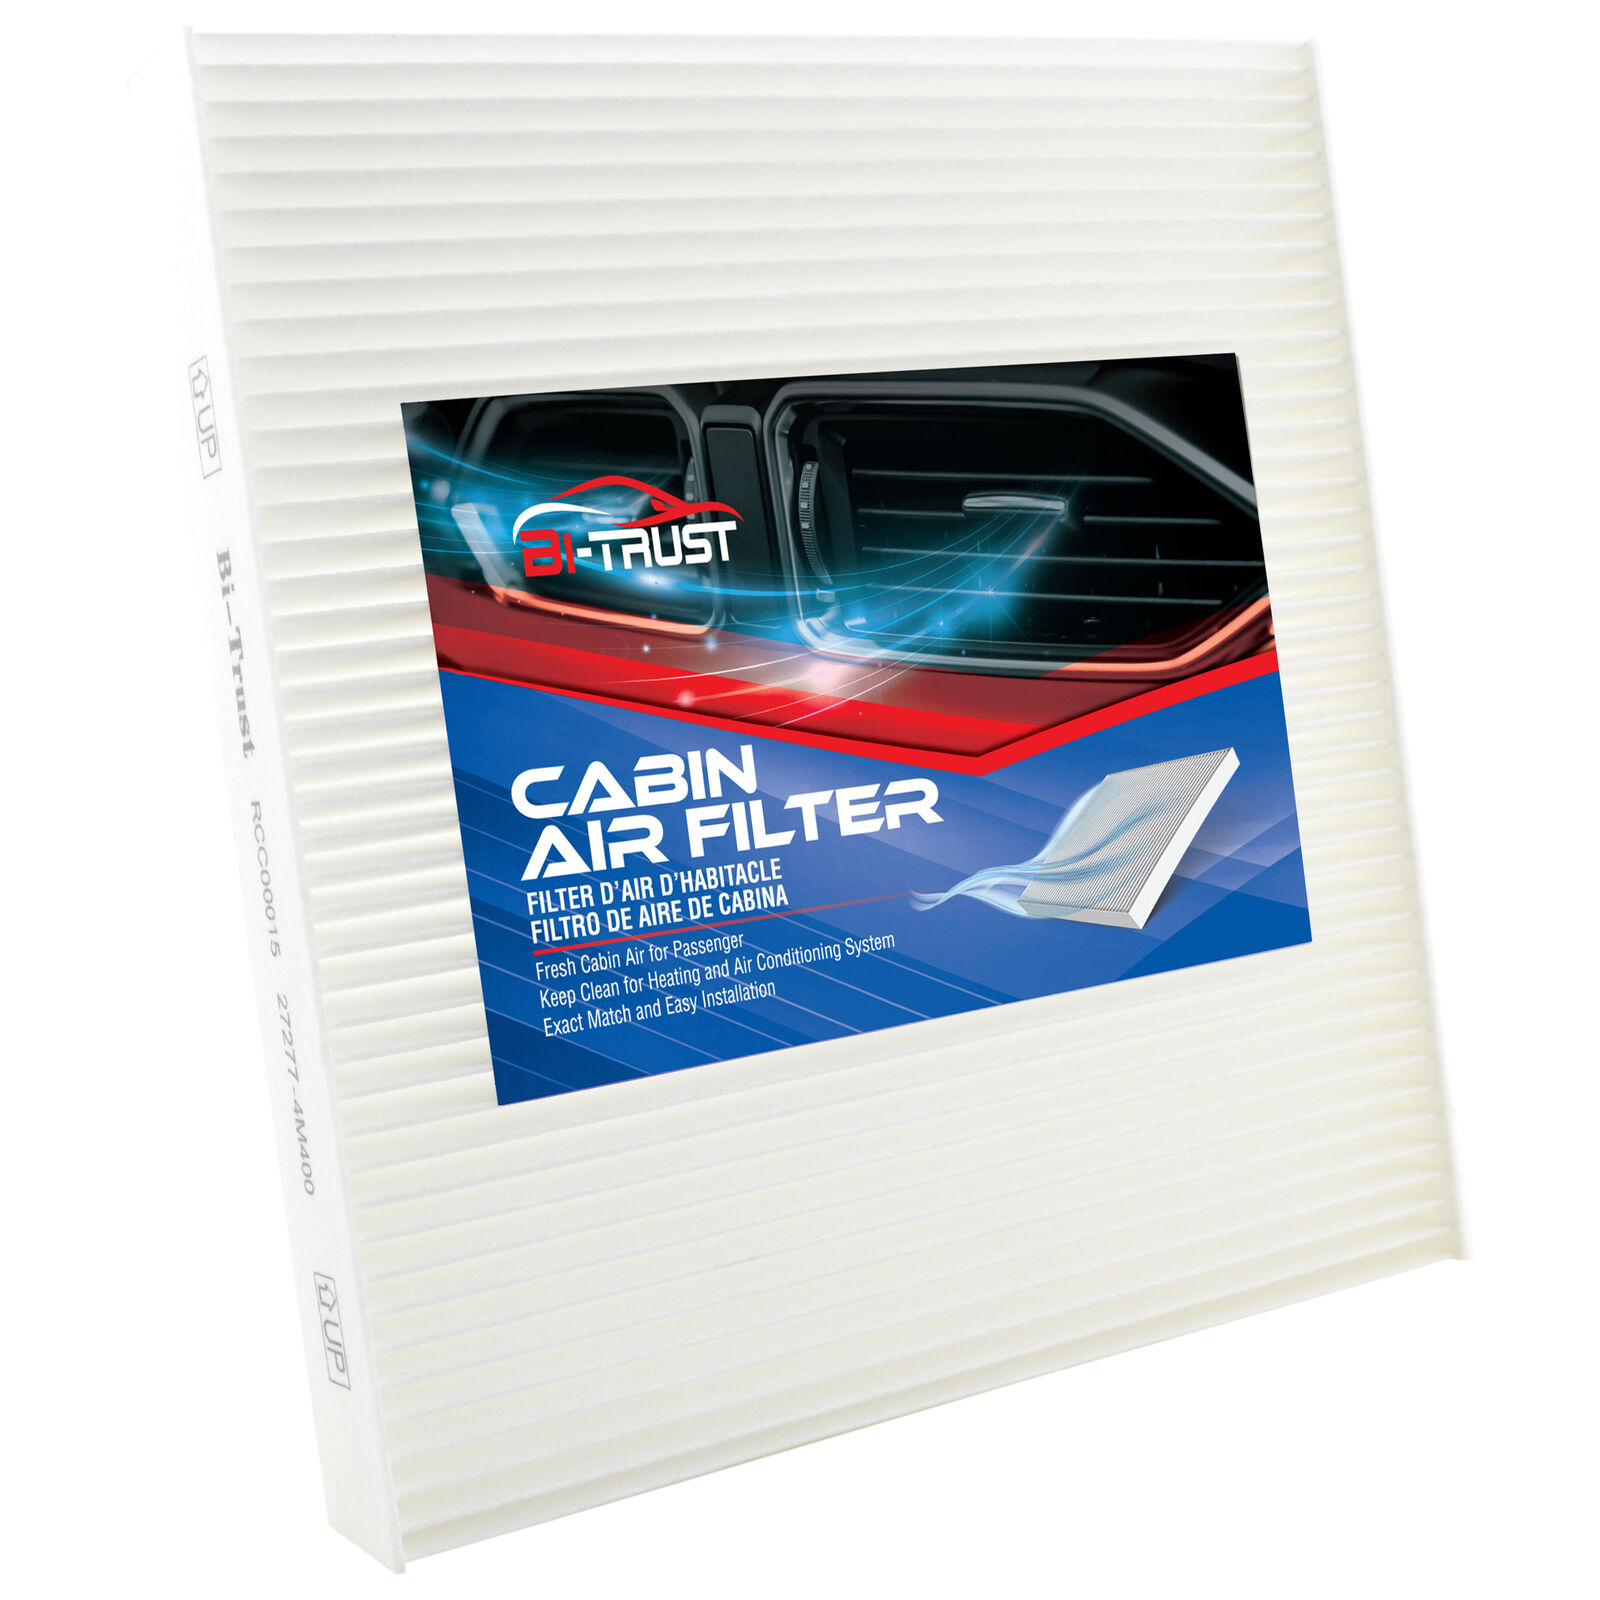 Cabin Air Filter for Infiniti FX35 2003-2008 G35 2003-2007 3.5L FX45 03-08 4.5L